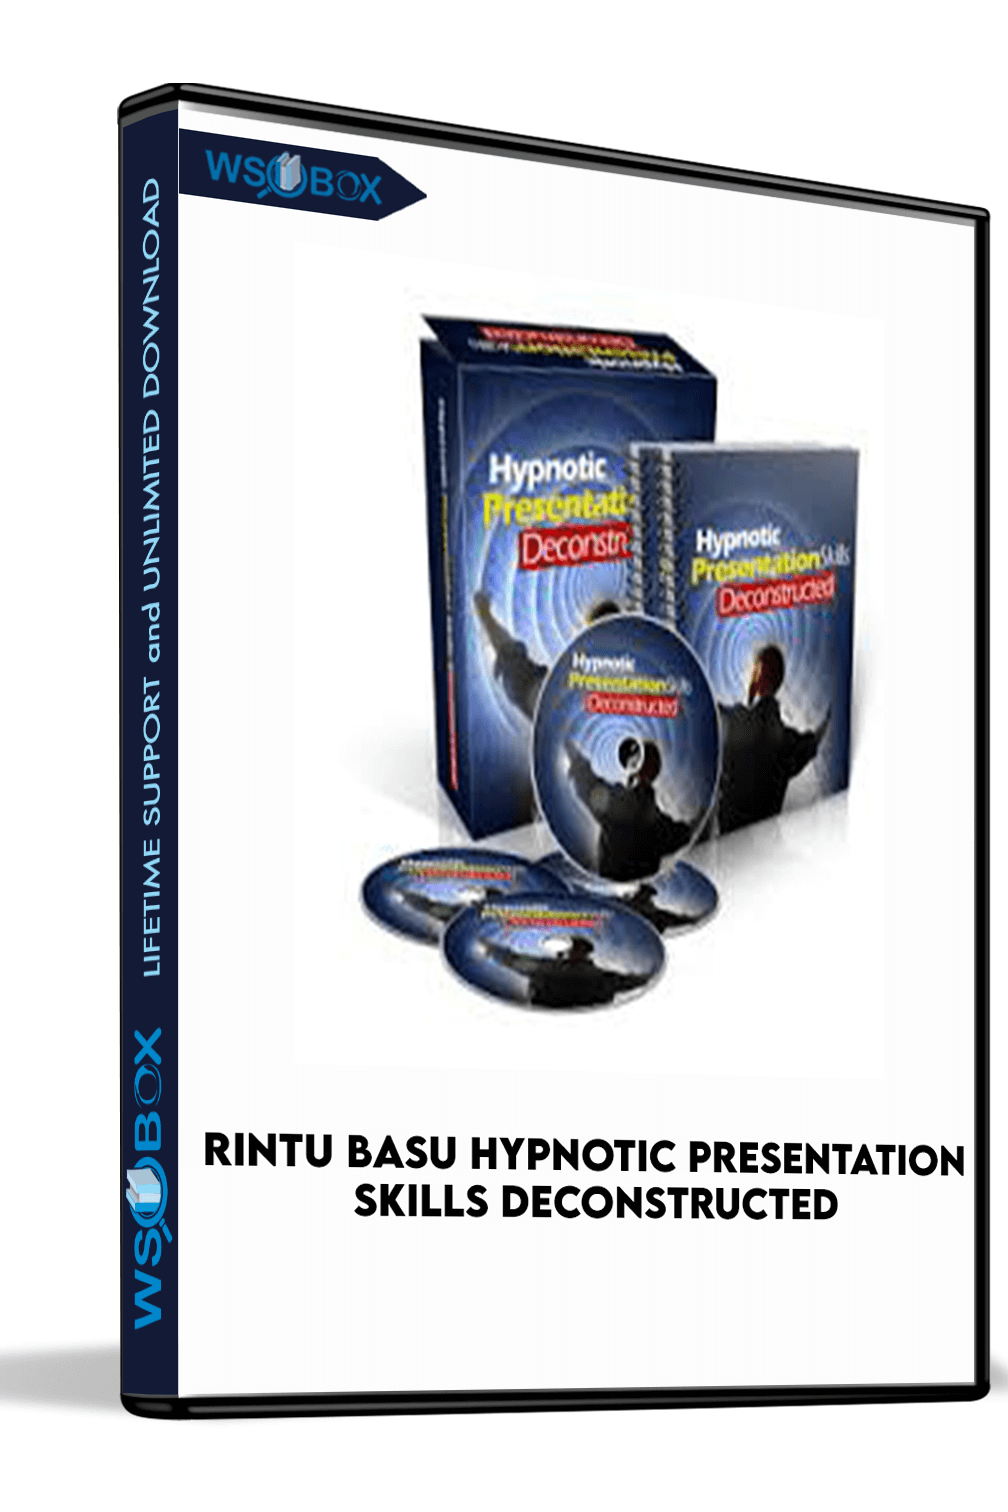 rintu-basu-hypnotic-presentation-skills-deconstructed